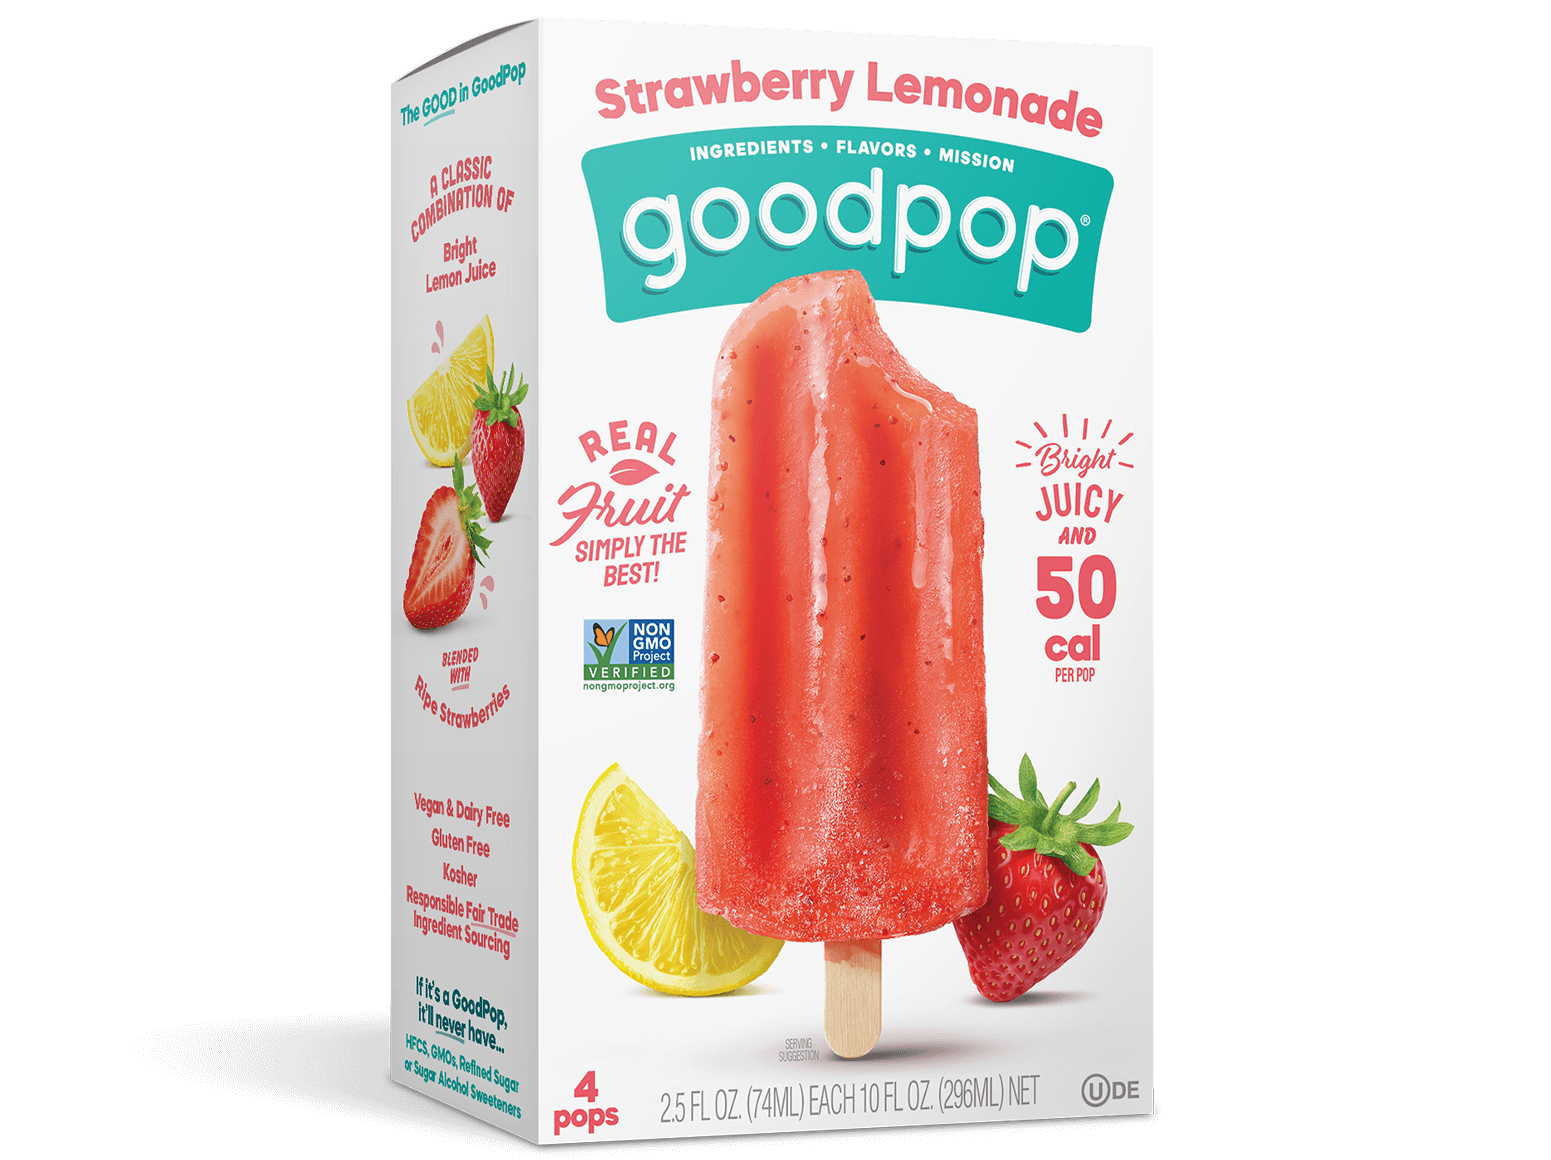 Strawberry Lemonade box